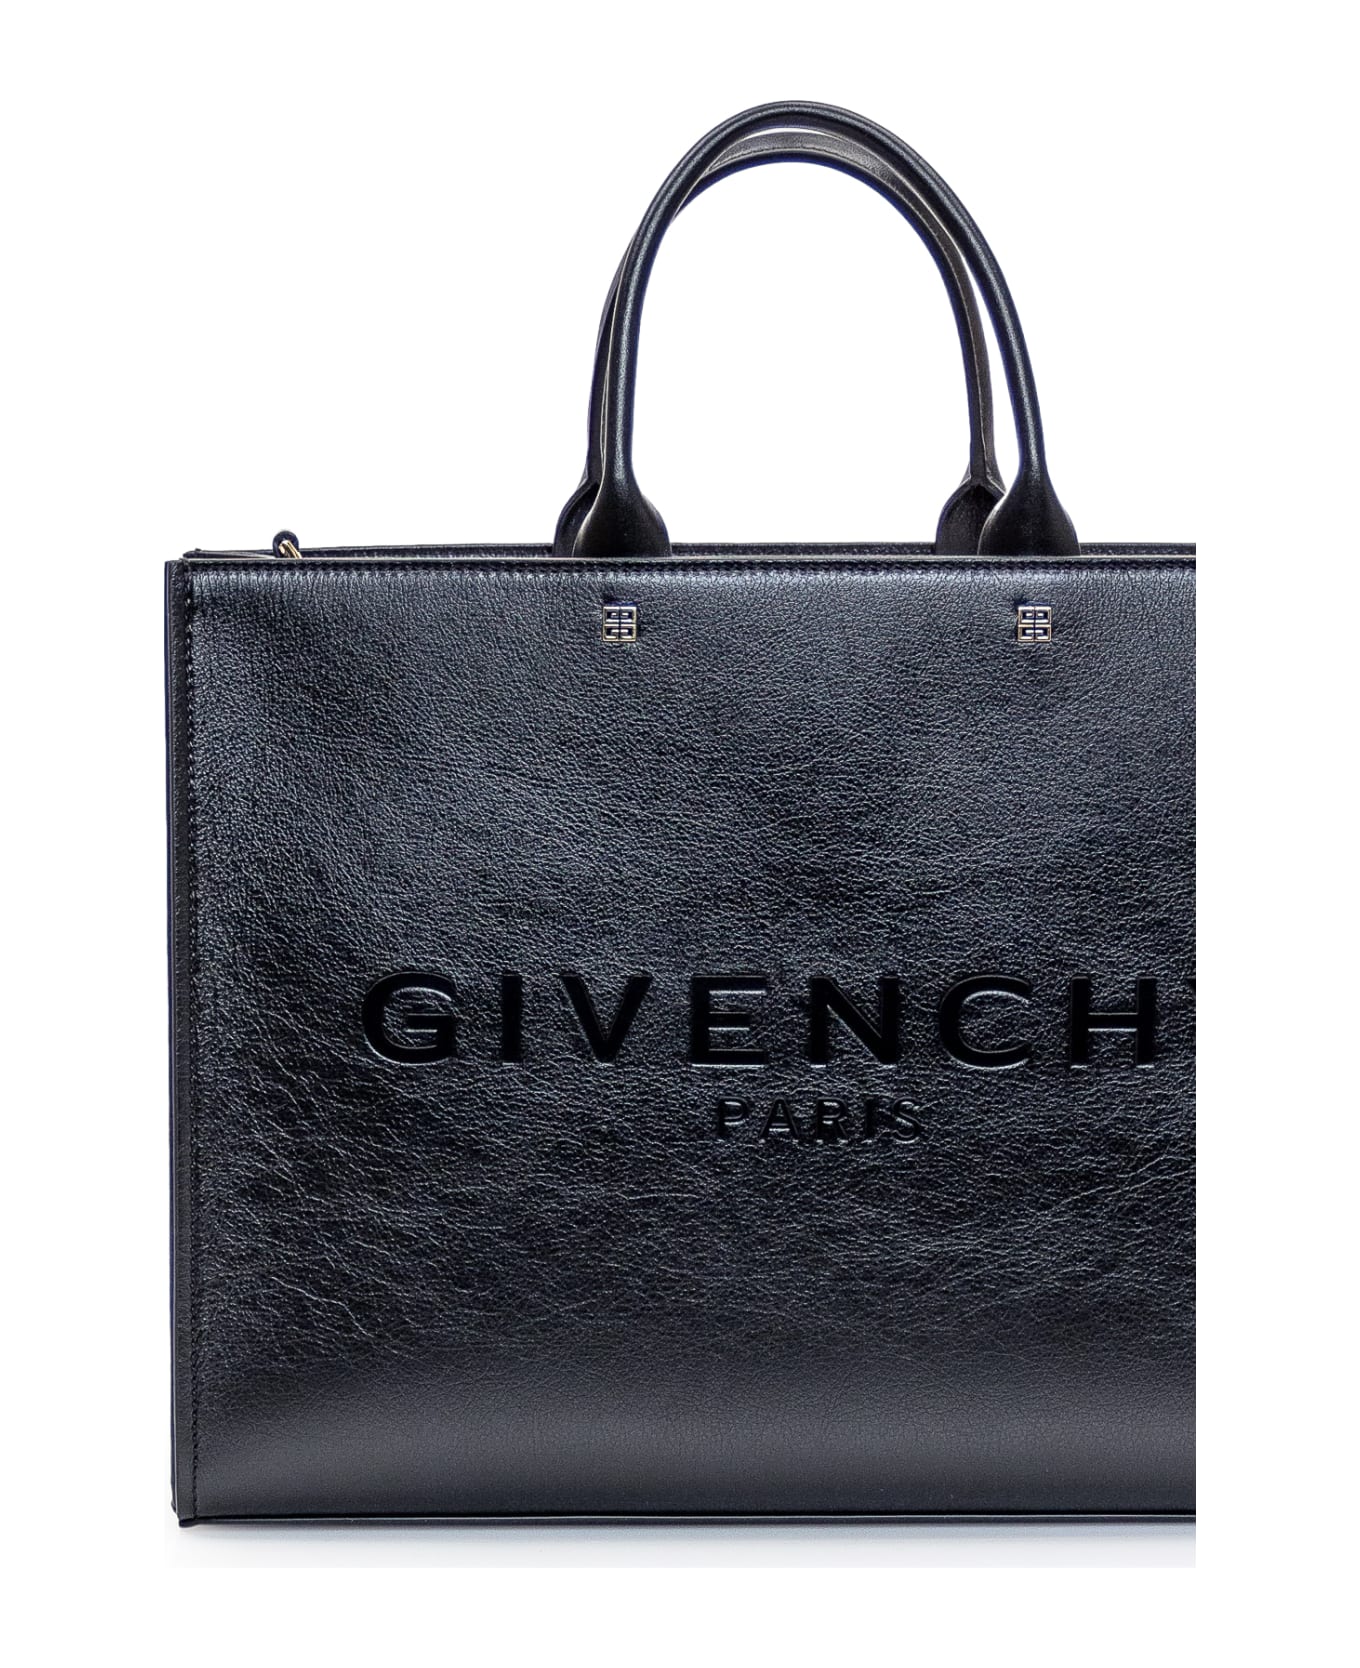 Givenchy G Tote Tote - Black